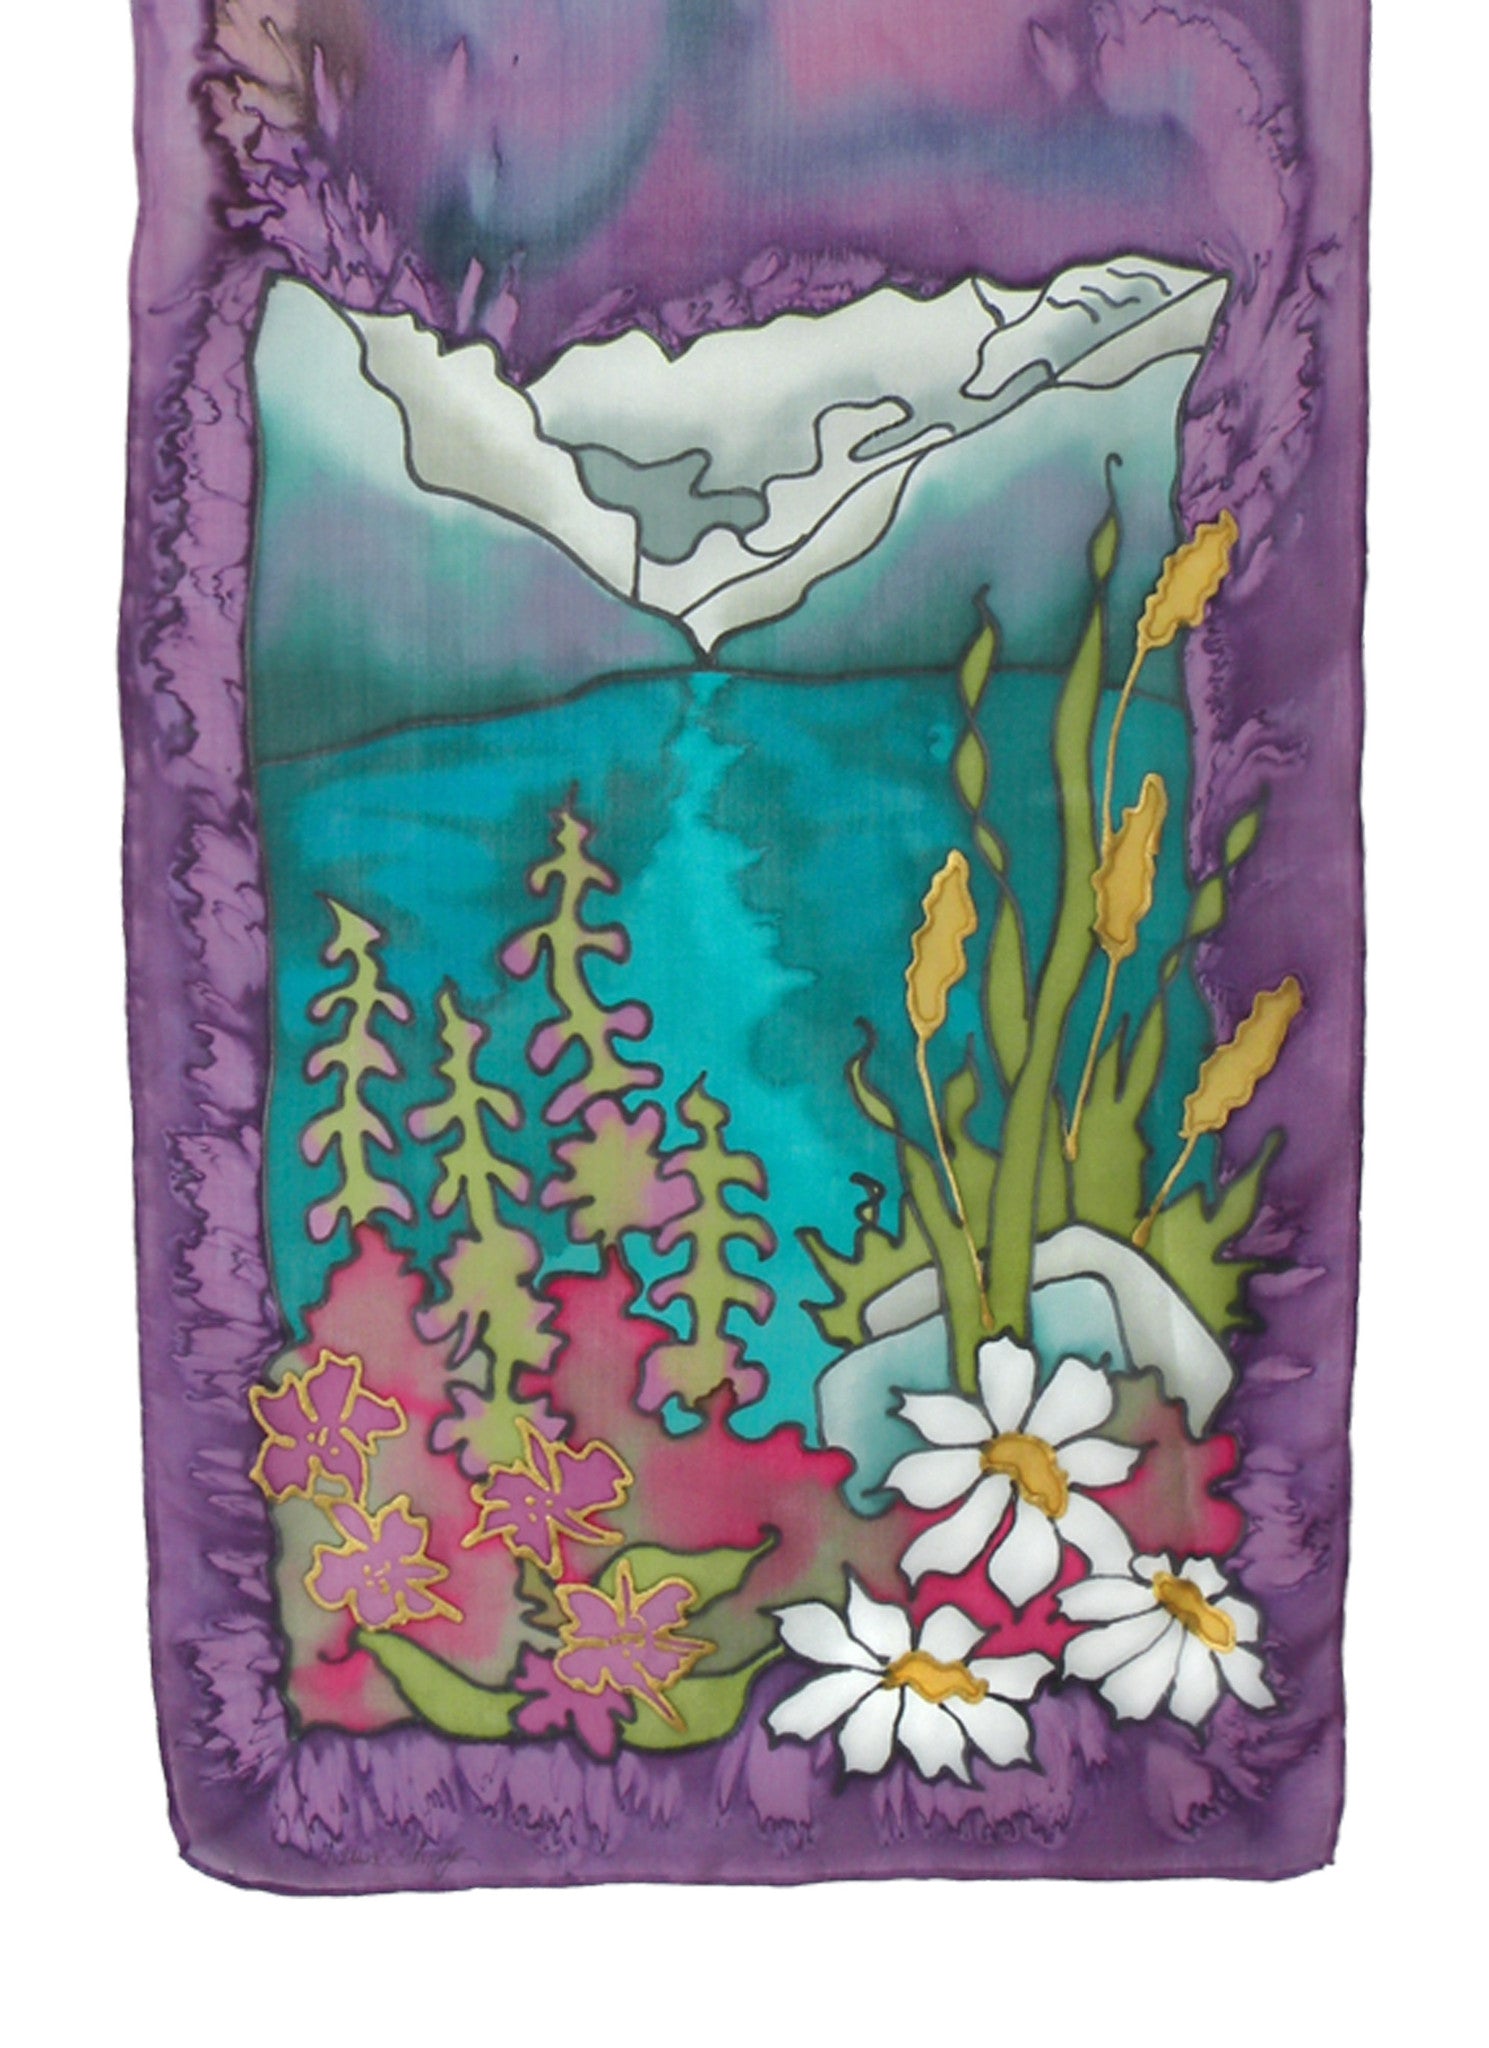 Hand-painted silk rocky mountain flowers design in purple